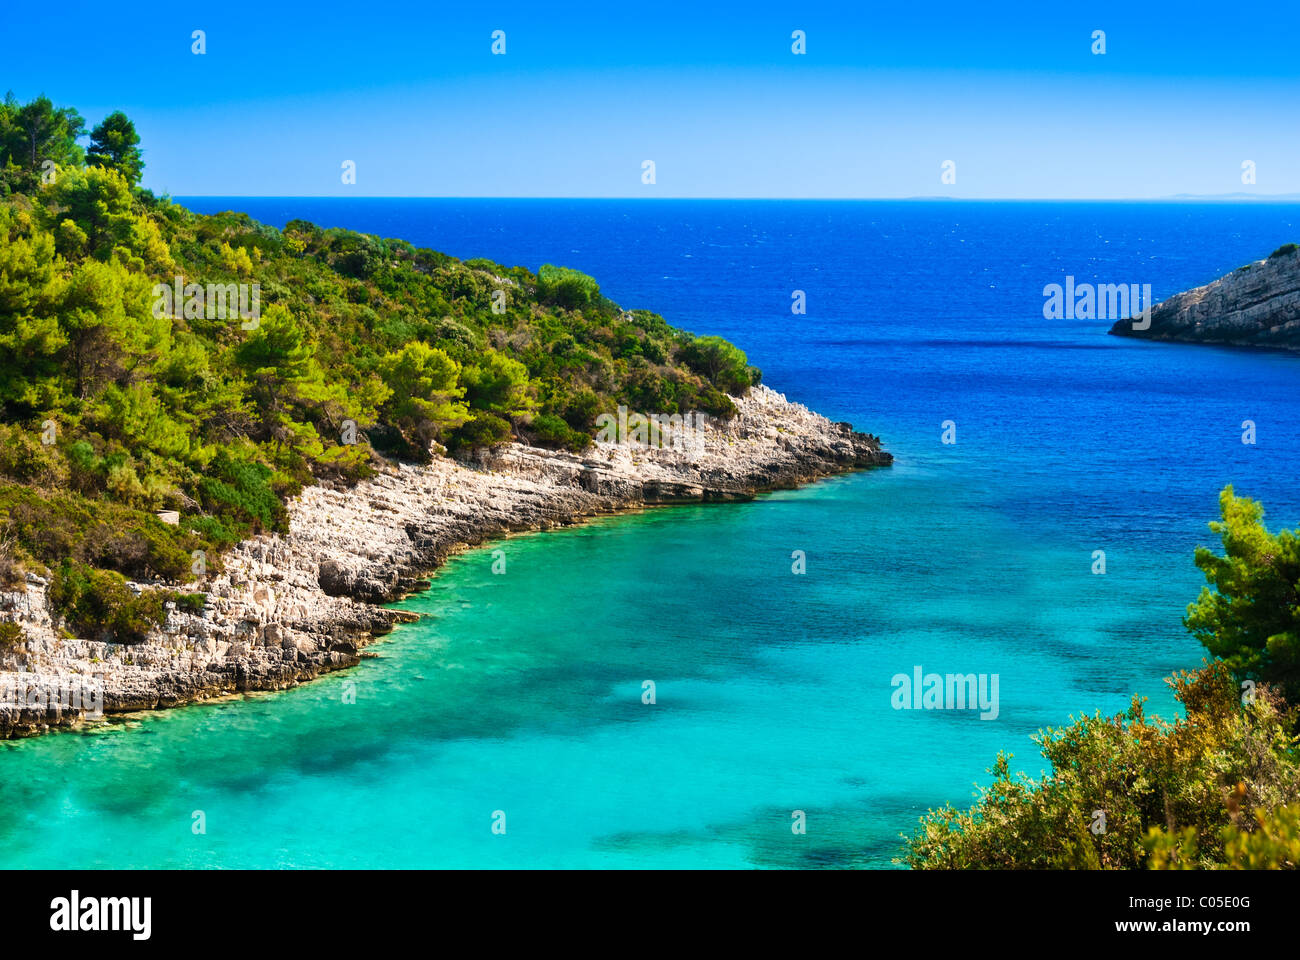 Blaue Lagune, Inselparadies. Adria von Kroatien, Insel Korcula, beliebtes Touristenziel. Stockfoto